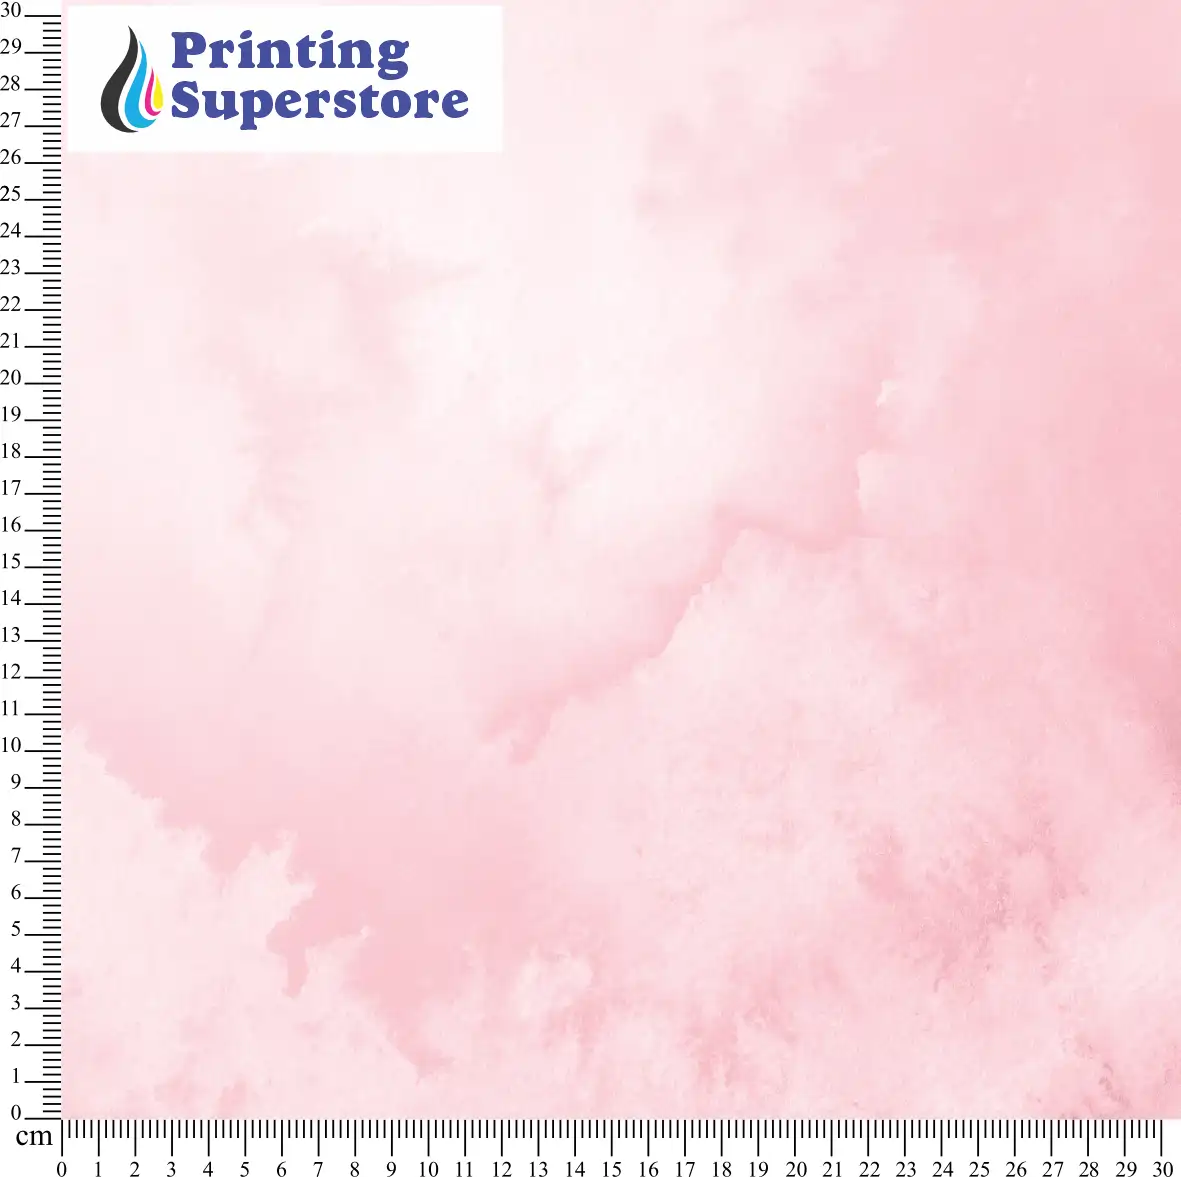 Pink Watercolour theme pattern printed on Self Adhesive Vinyl (SAV), Heat Transfer Vinyl (HTV) and Cardstock.